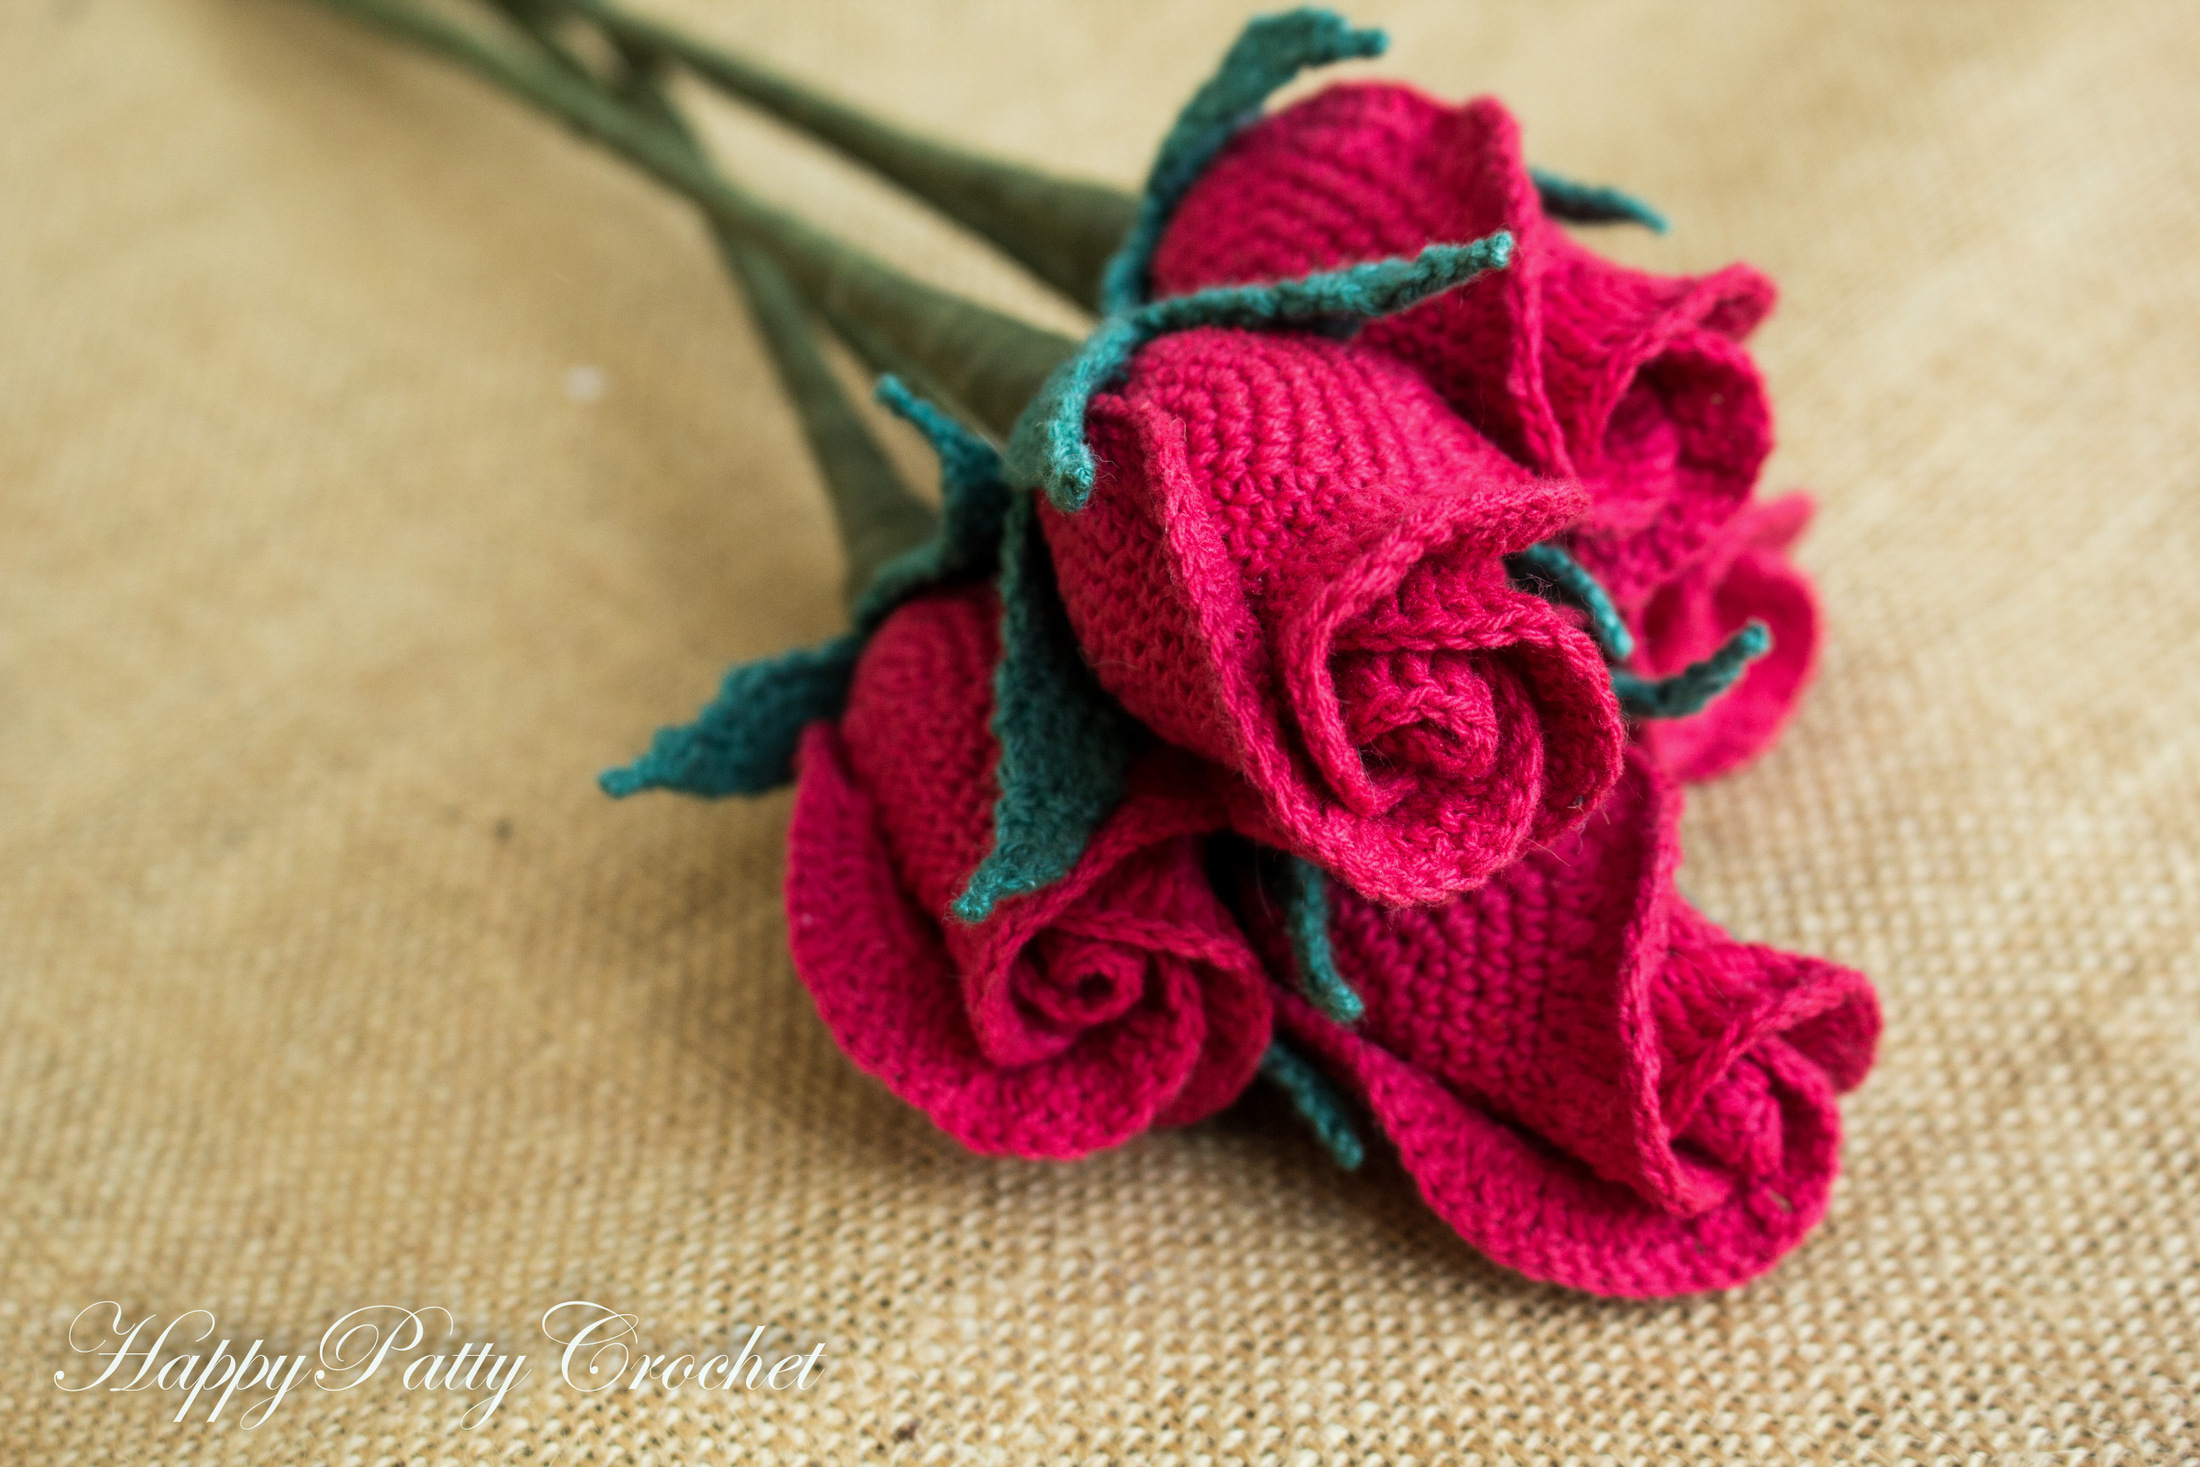 Crochet Rose Pattern Crochet Closed Rose Pattern Happy Patty Crochet